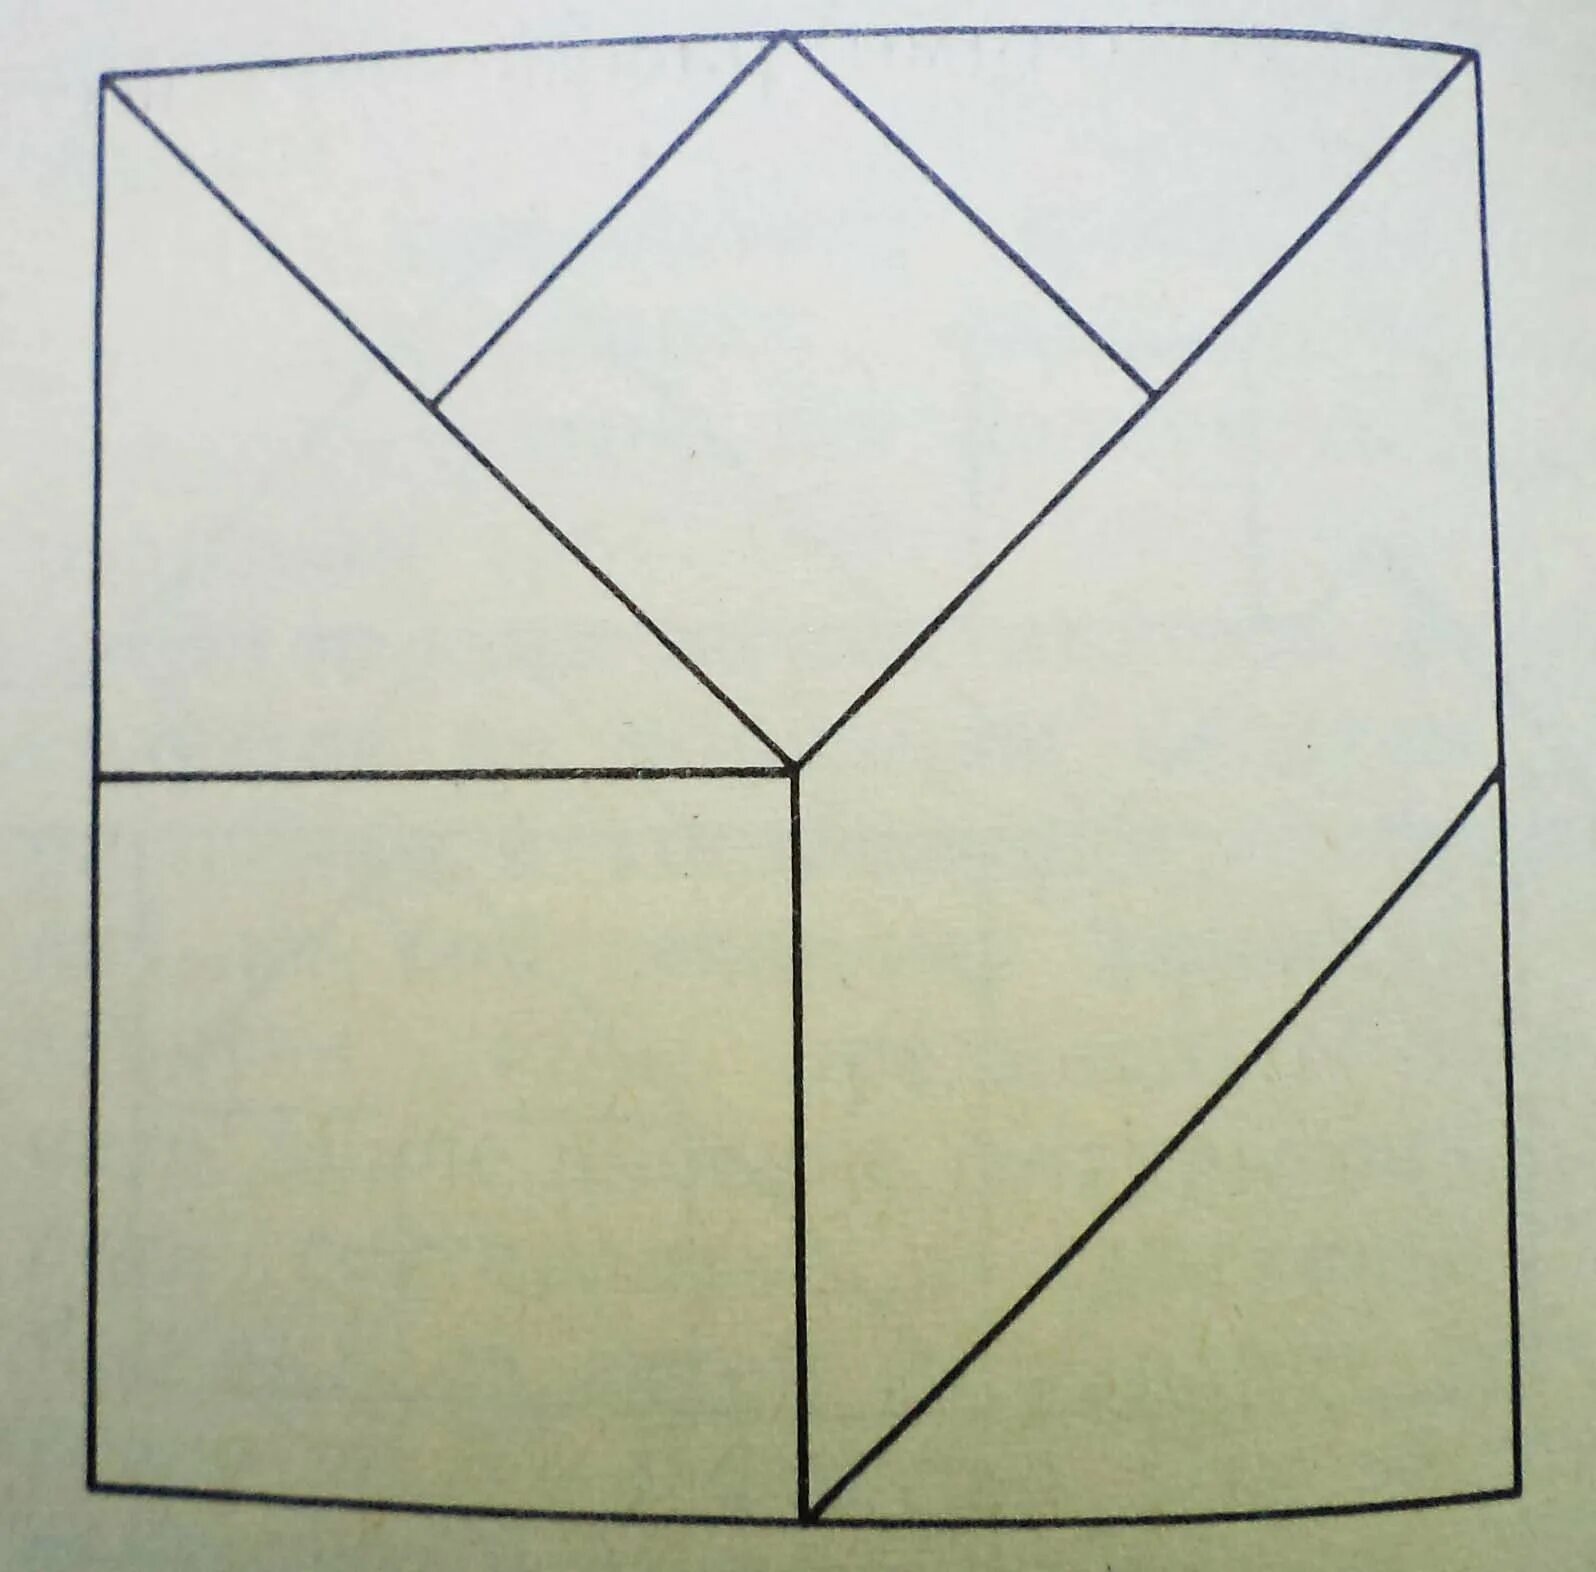 "Танграм", "квадрат Пифагора", "сложи квадрат". Игра Пифагор танграм. Пифагор игра головоломка. Головоломка Пифагора танграм. Из треугольников сложить квадрат